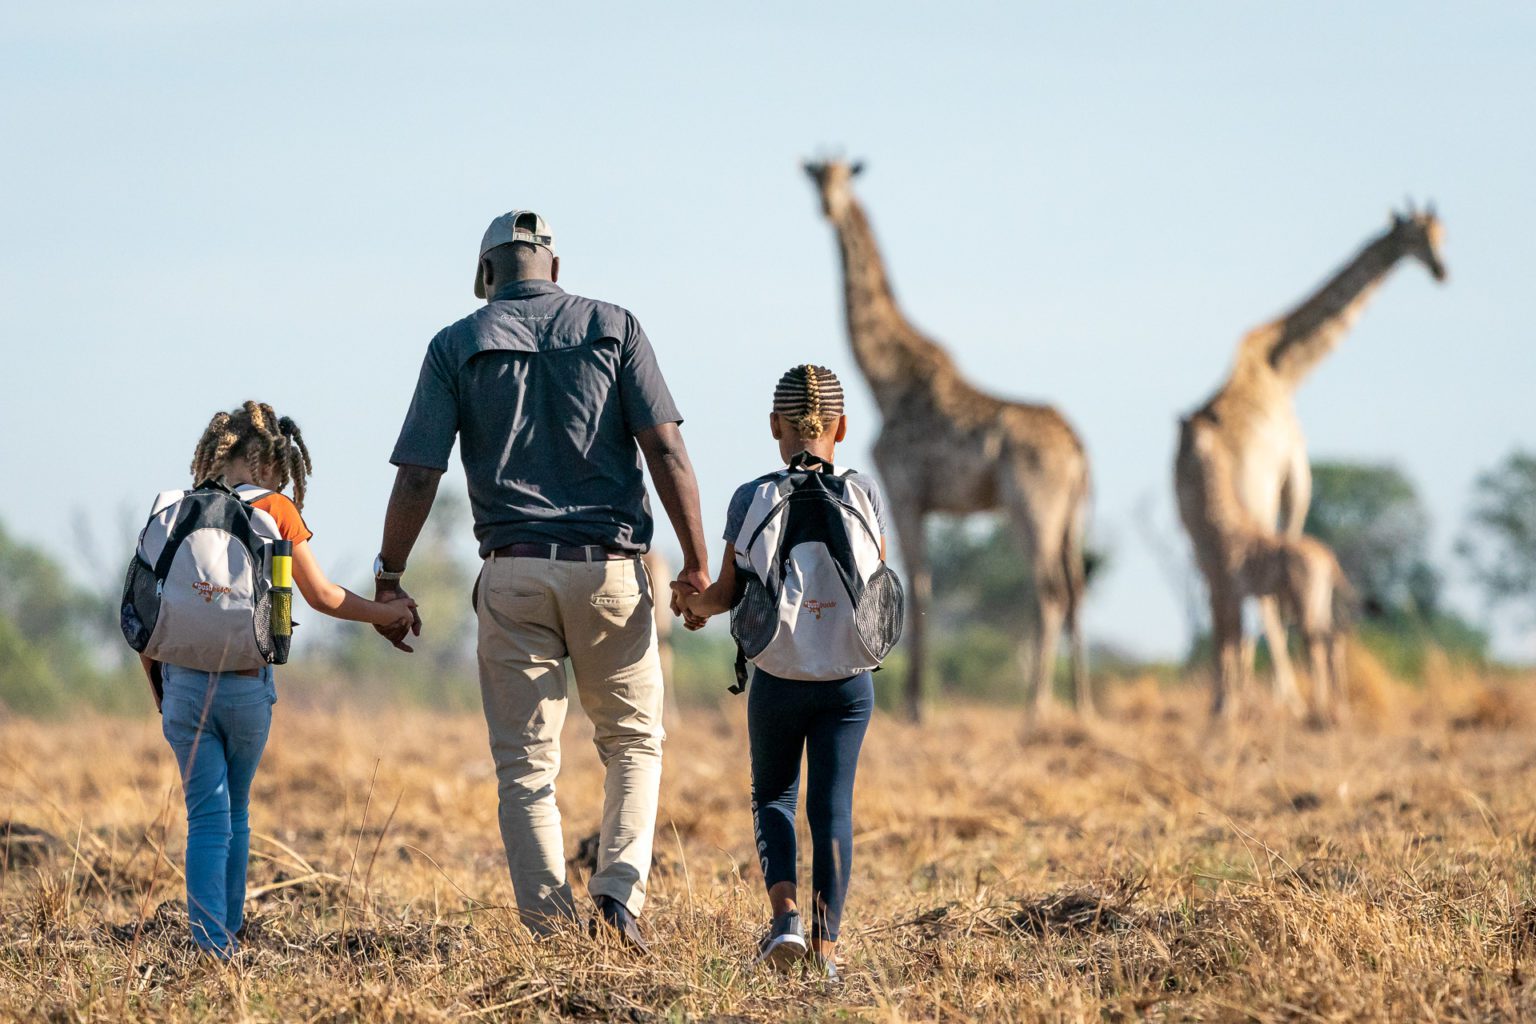 seba camp bush walk guide with two children on the best botswana safari. Family travel activities